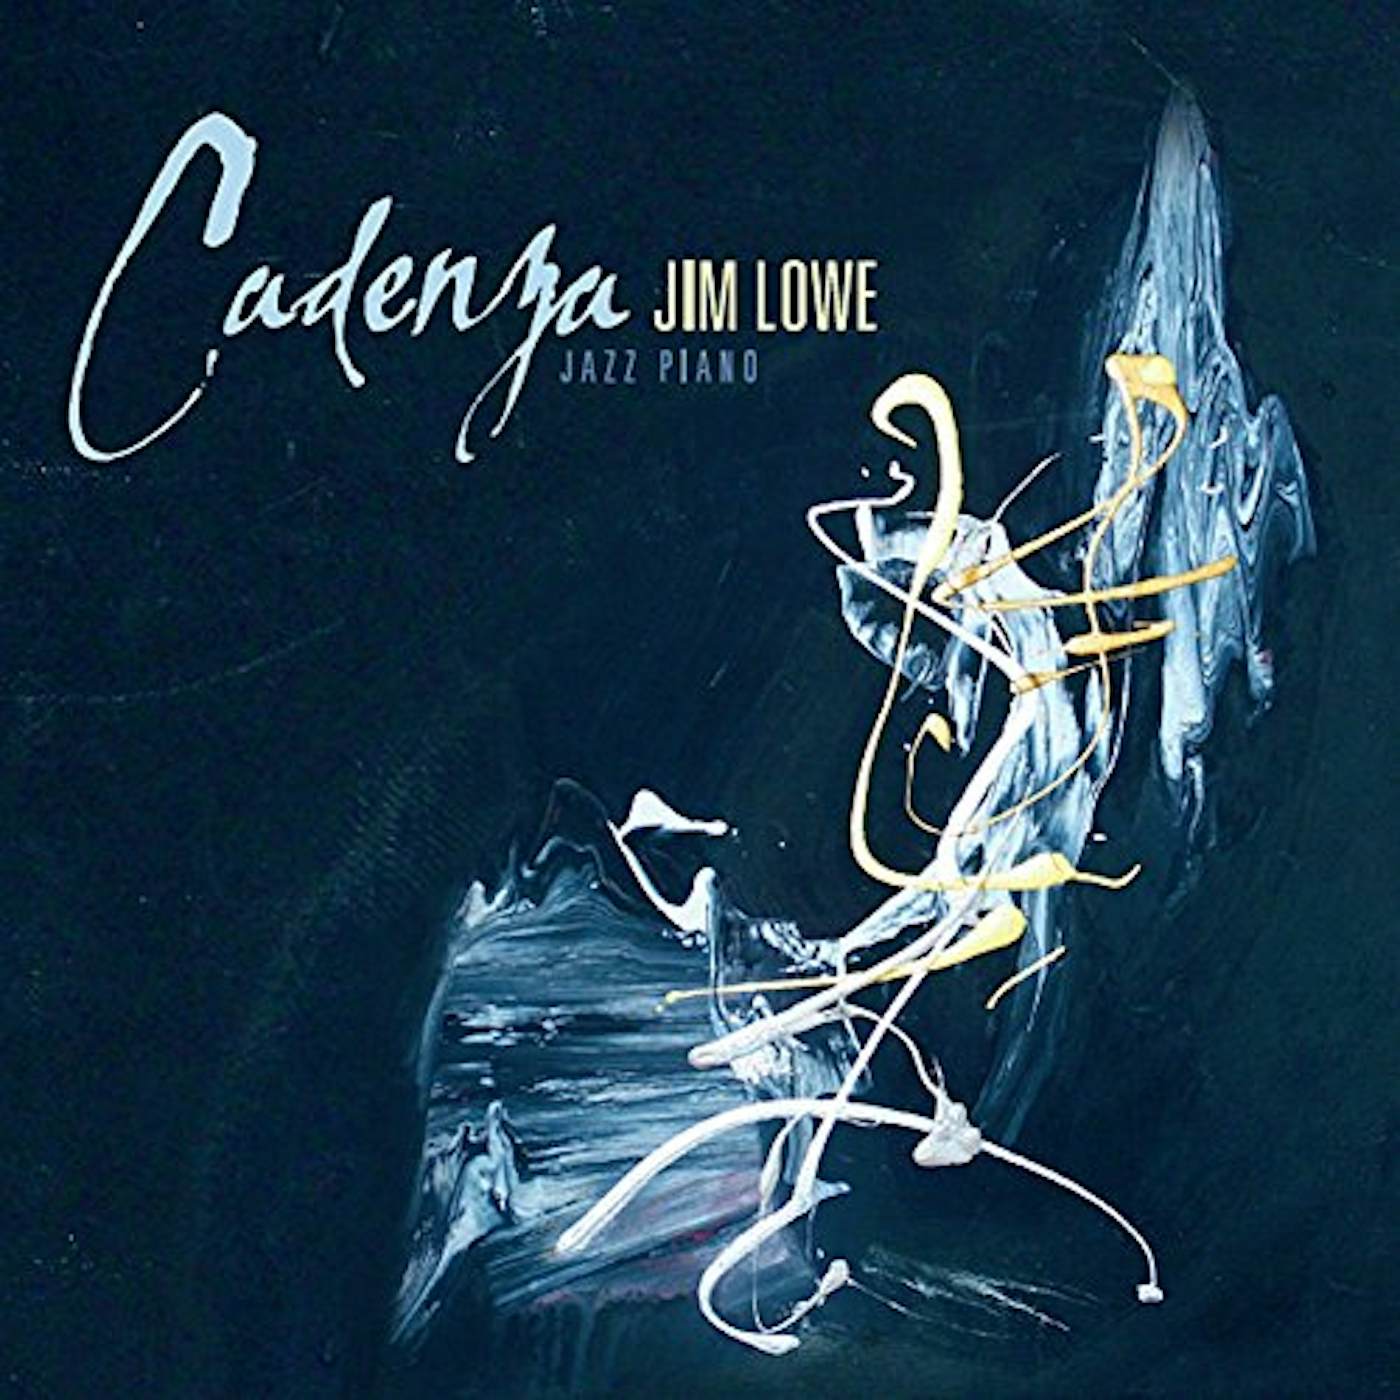 Jim Lowe CADENZA CD